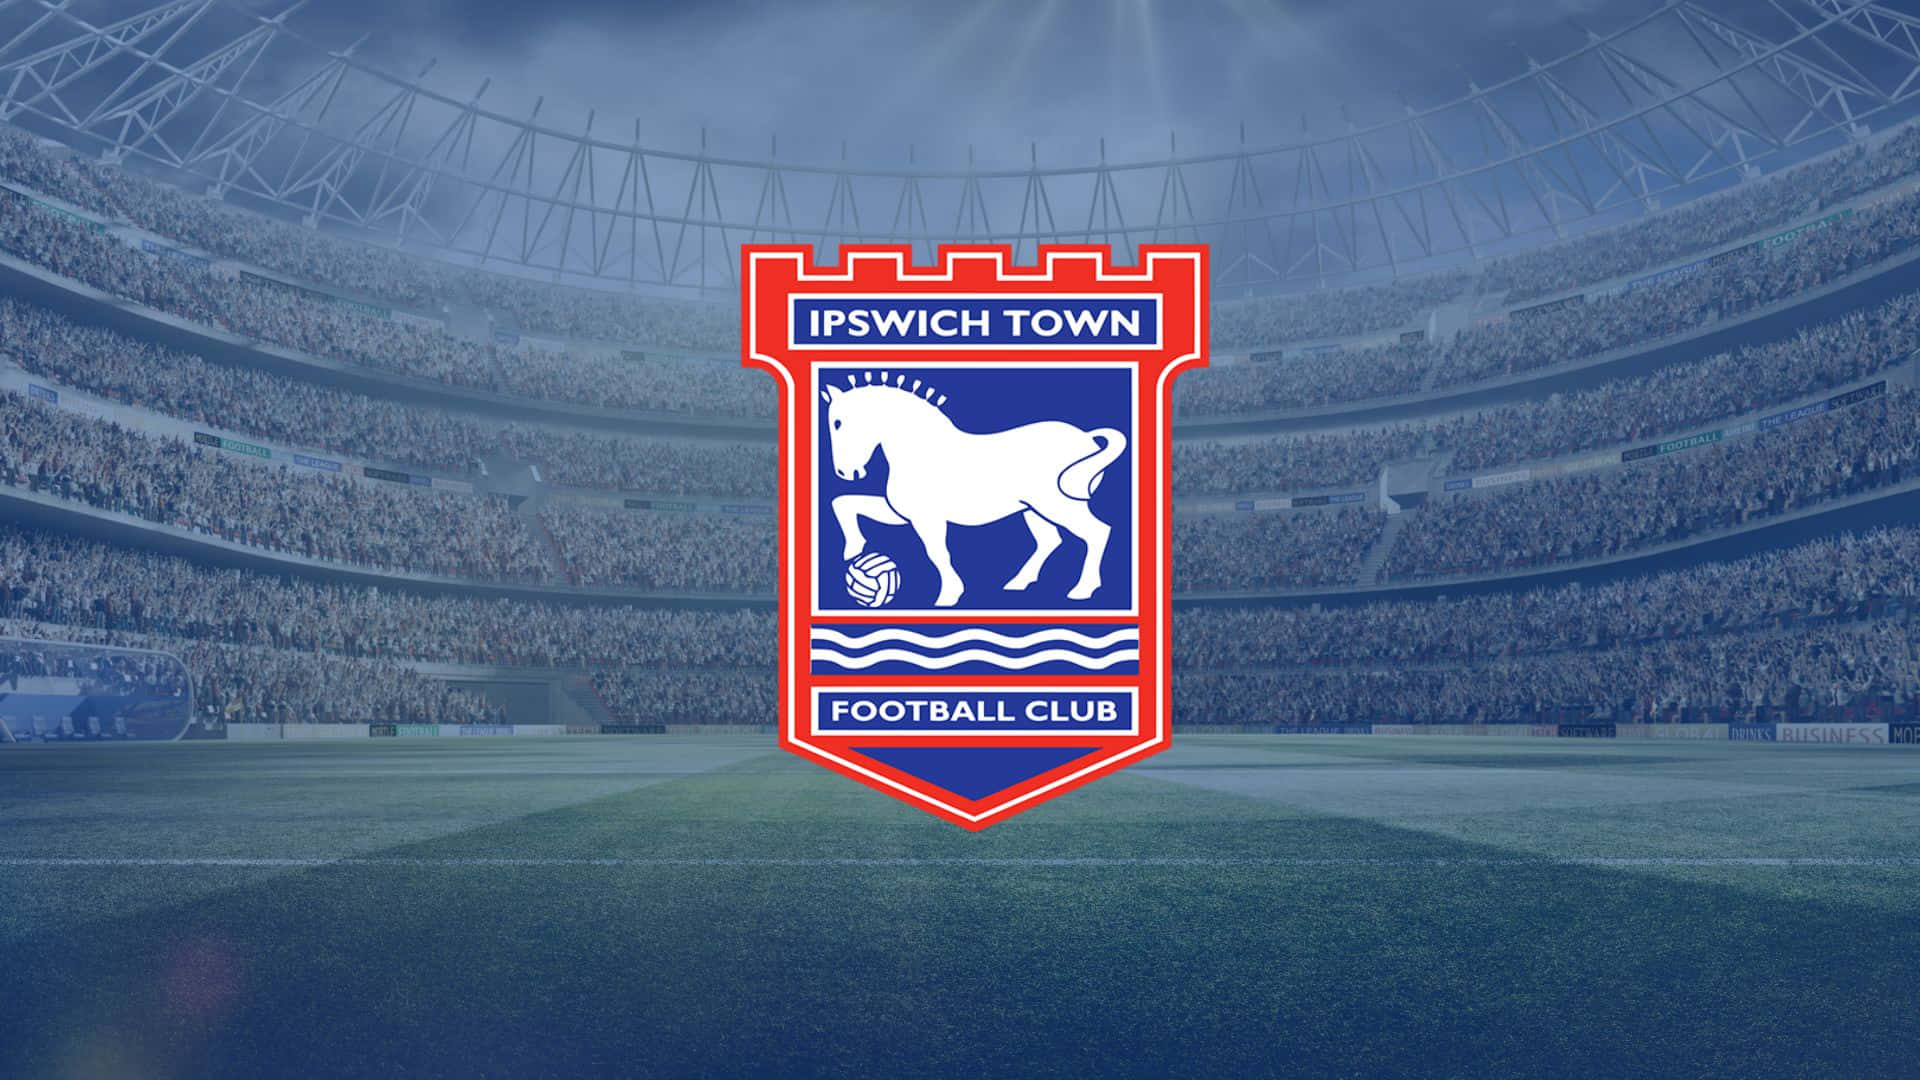 Clubde Fútbol Ipswich Town: El Orgullo De East Anglia. Fondo de pantalla